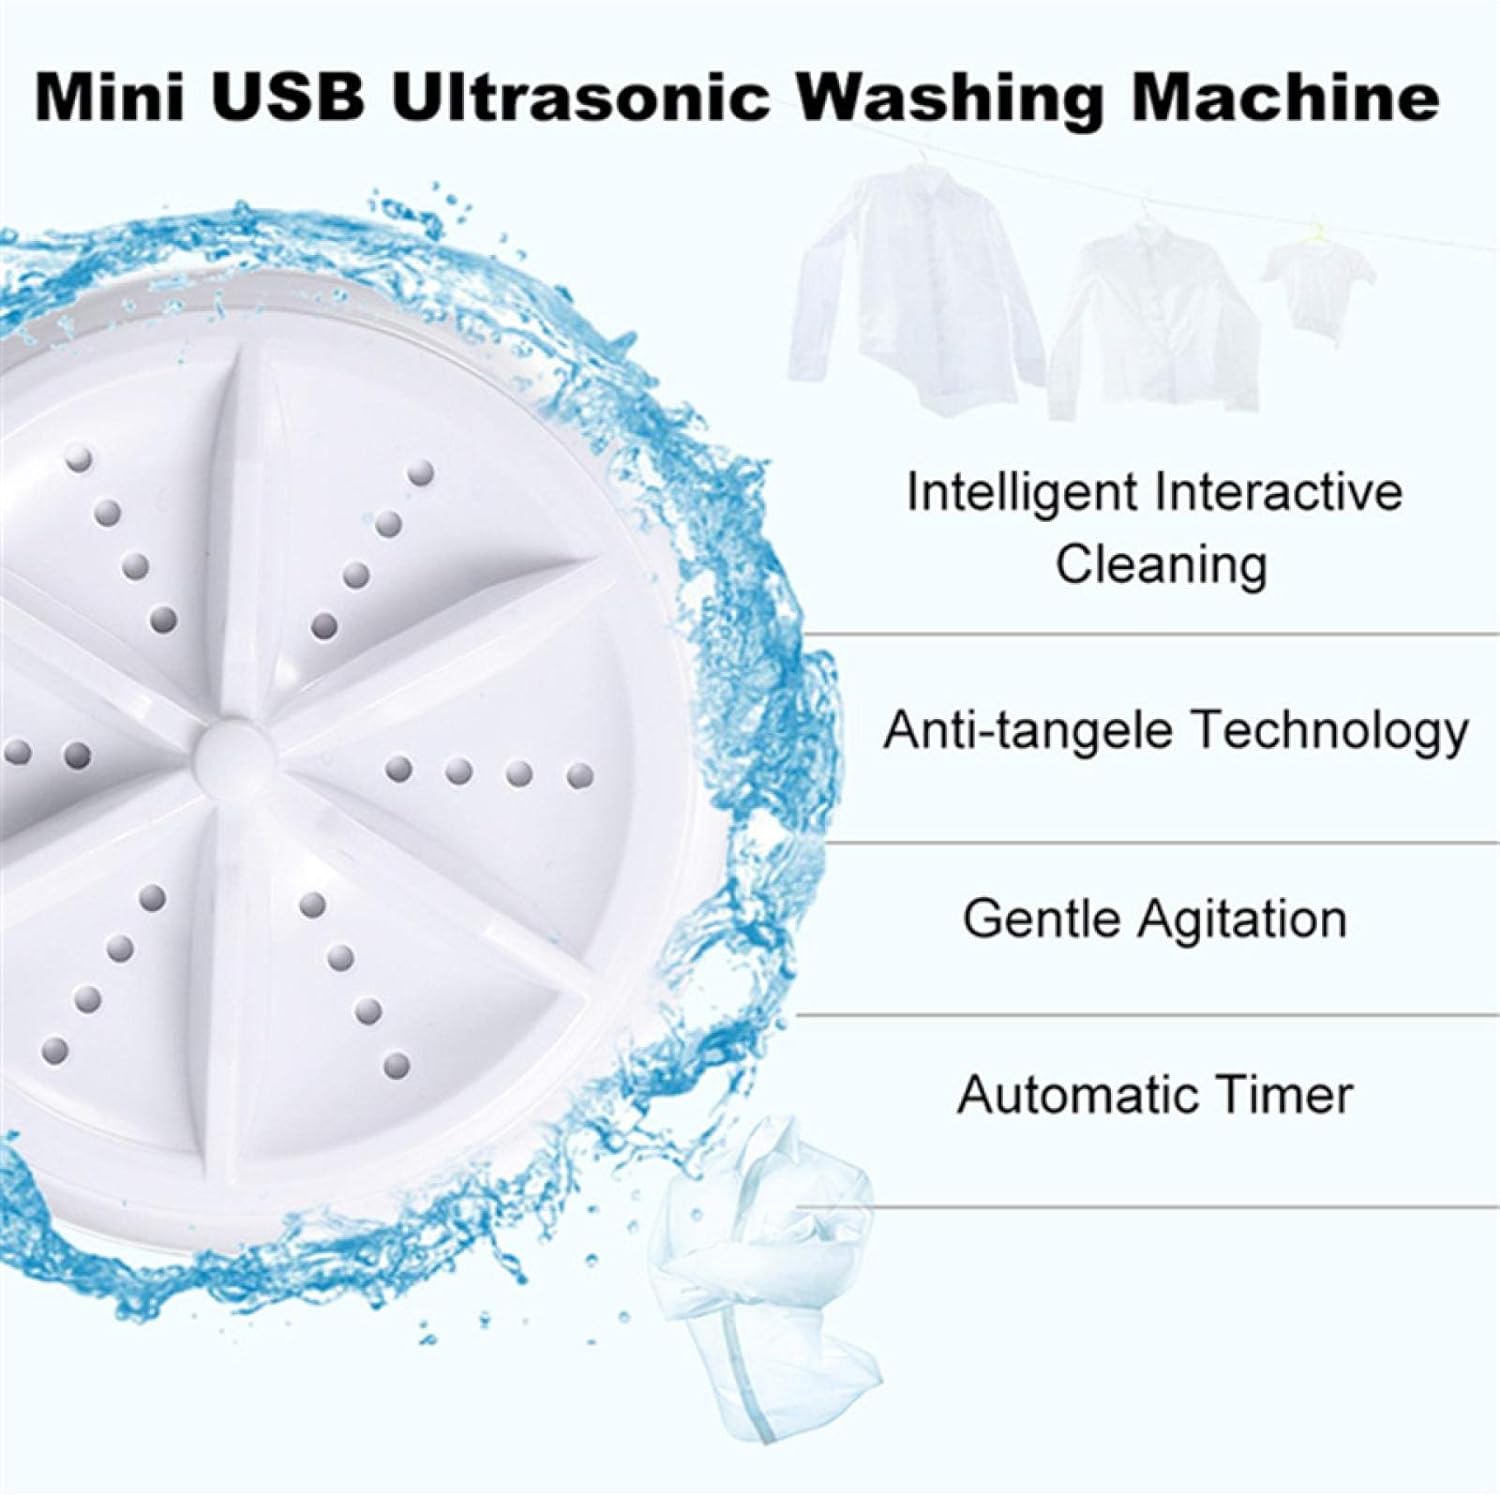 New Ultrasonic Mini Washing Machine (USB Operated)